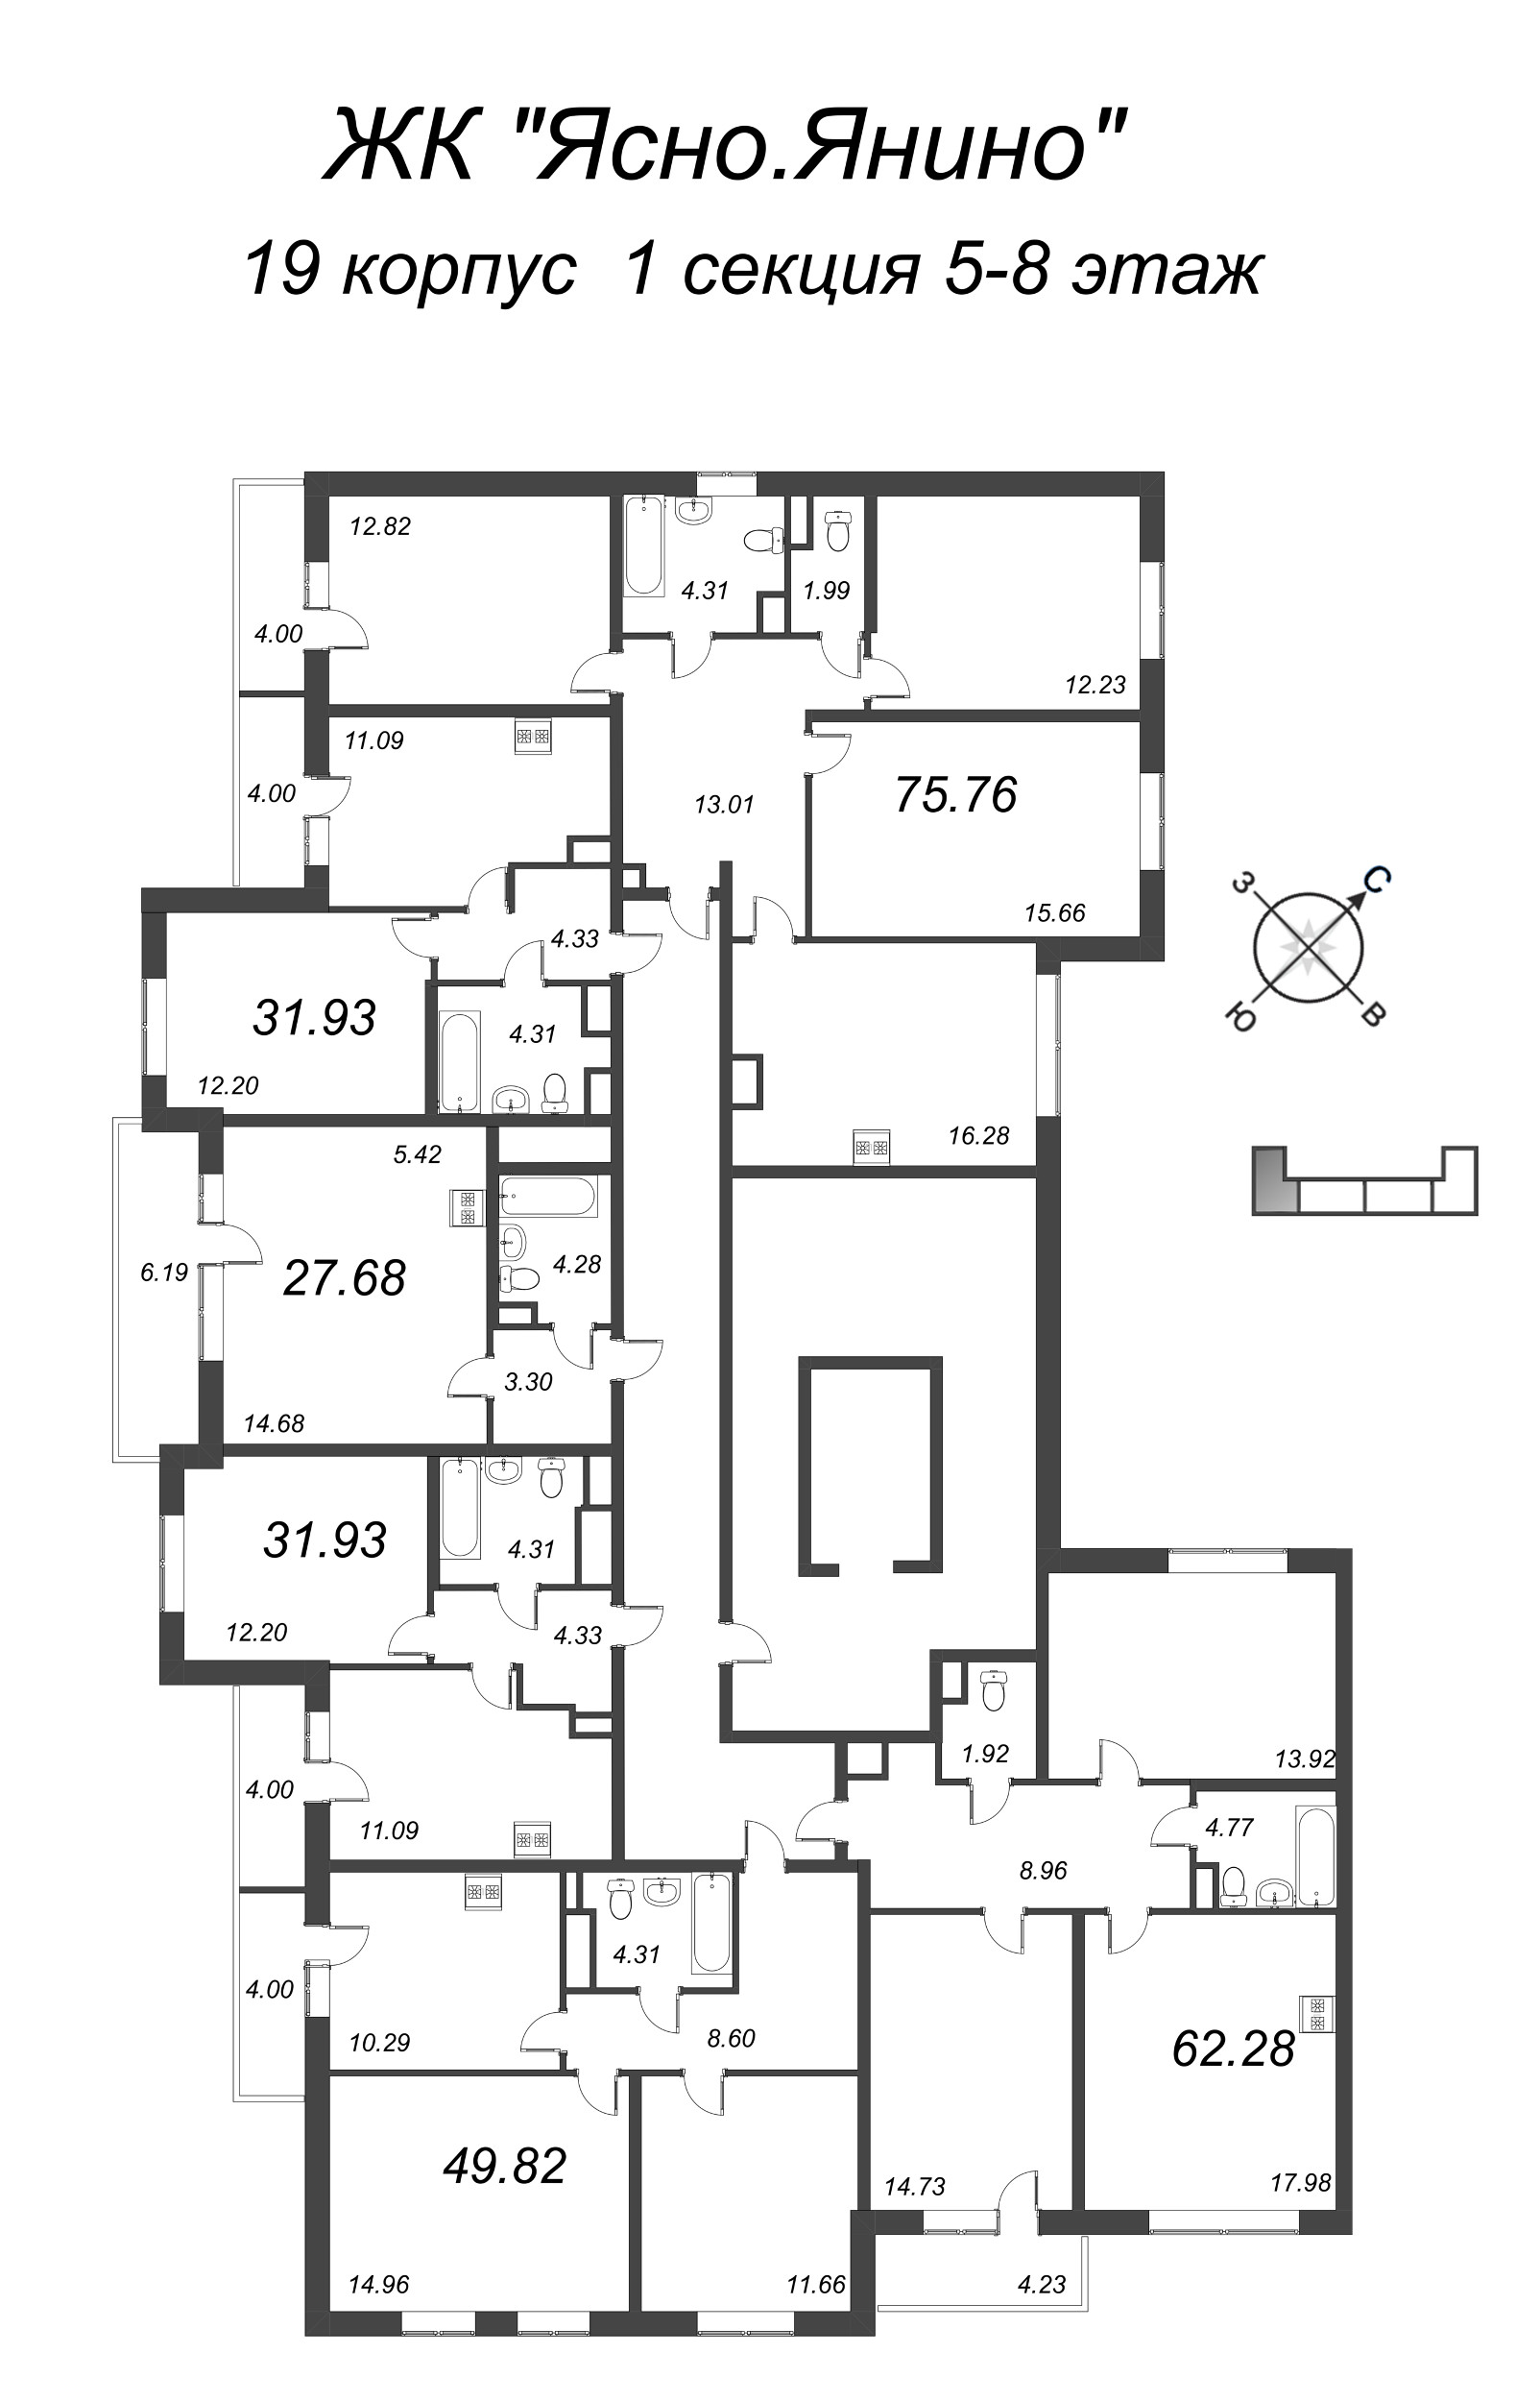 3-комнатная (Евро) квартира, 62.28 м² - планировка этажа